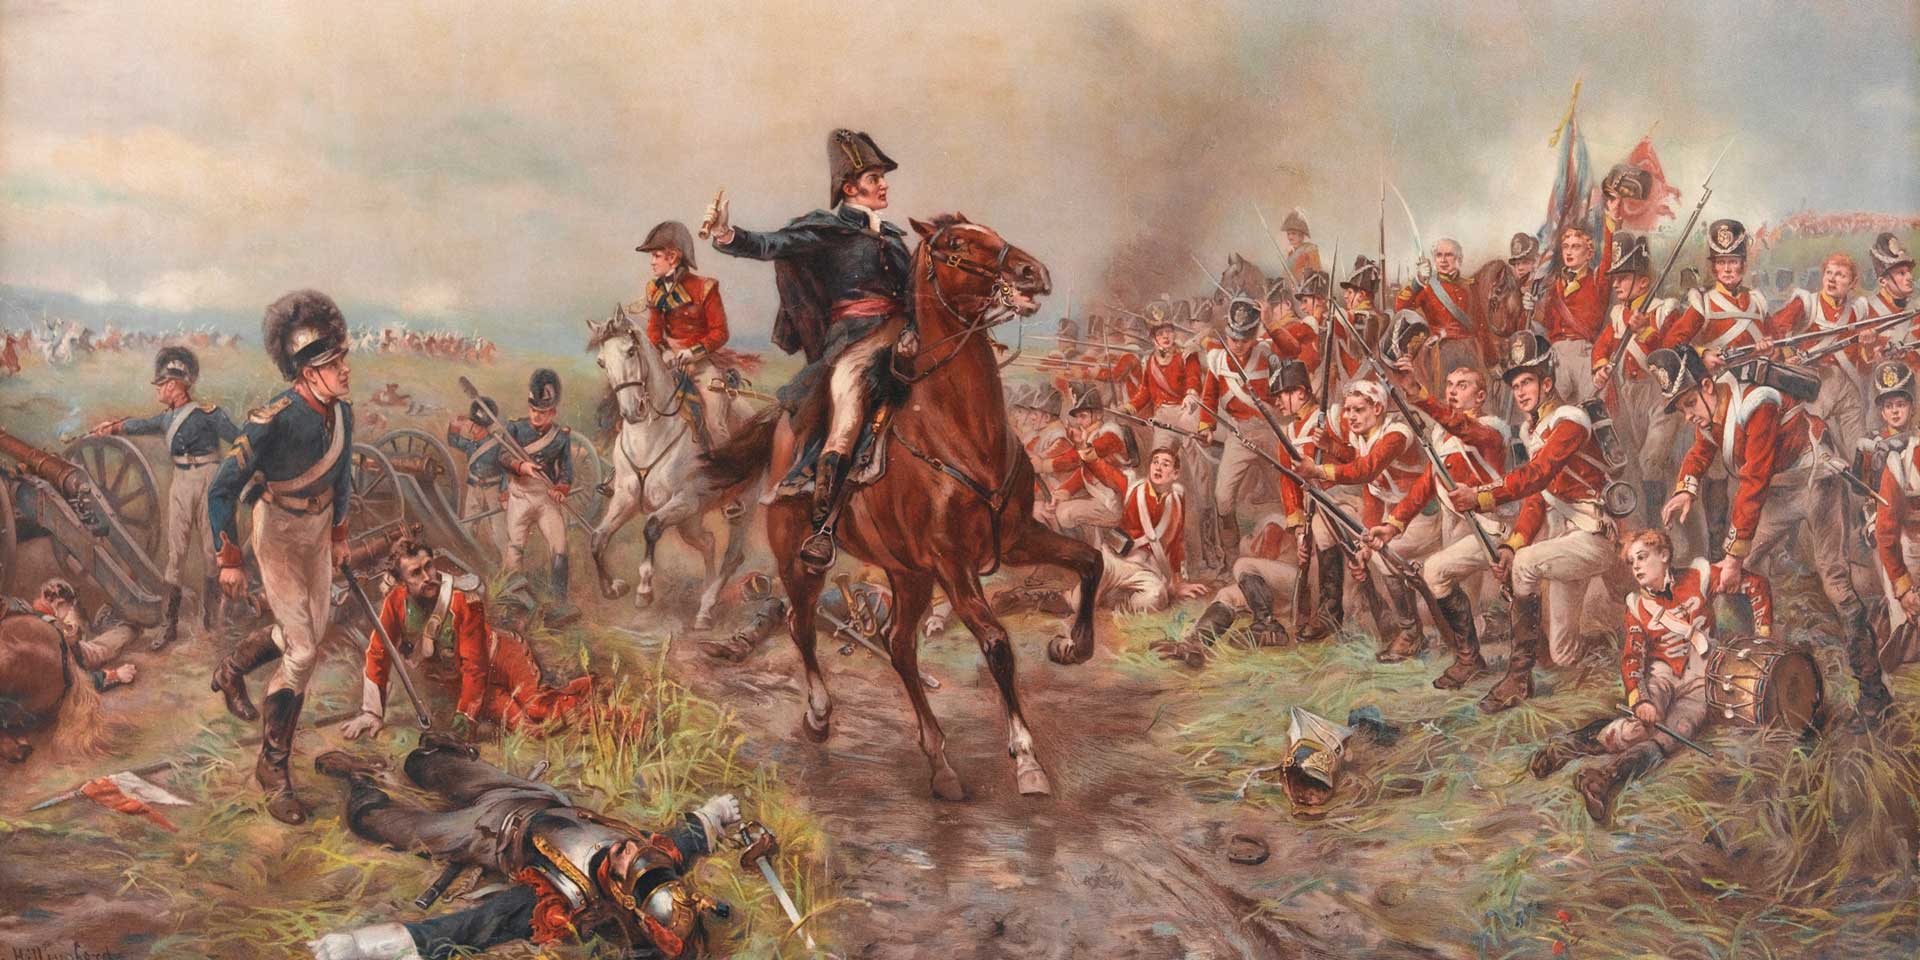 The Duke of Wellington at Waterloo, 1815